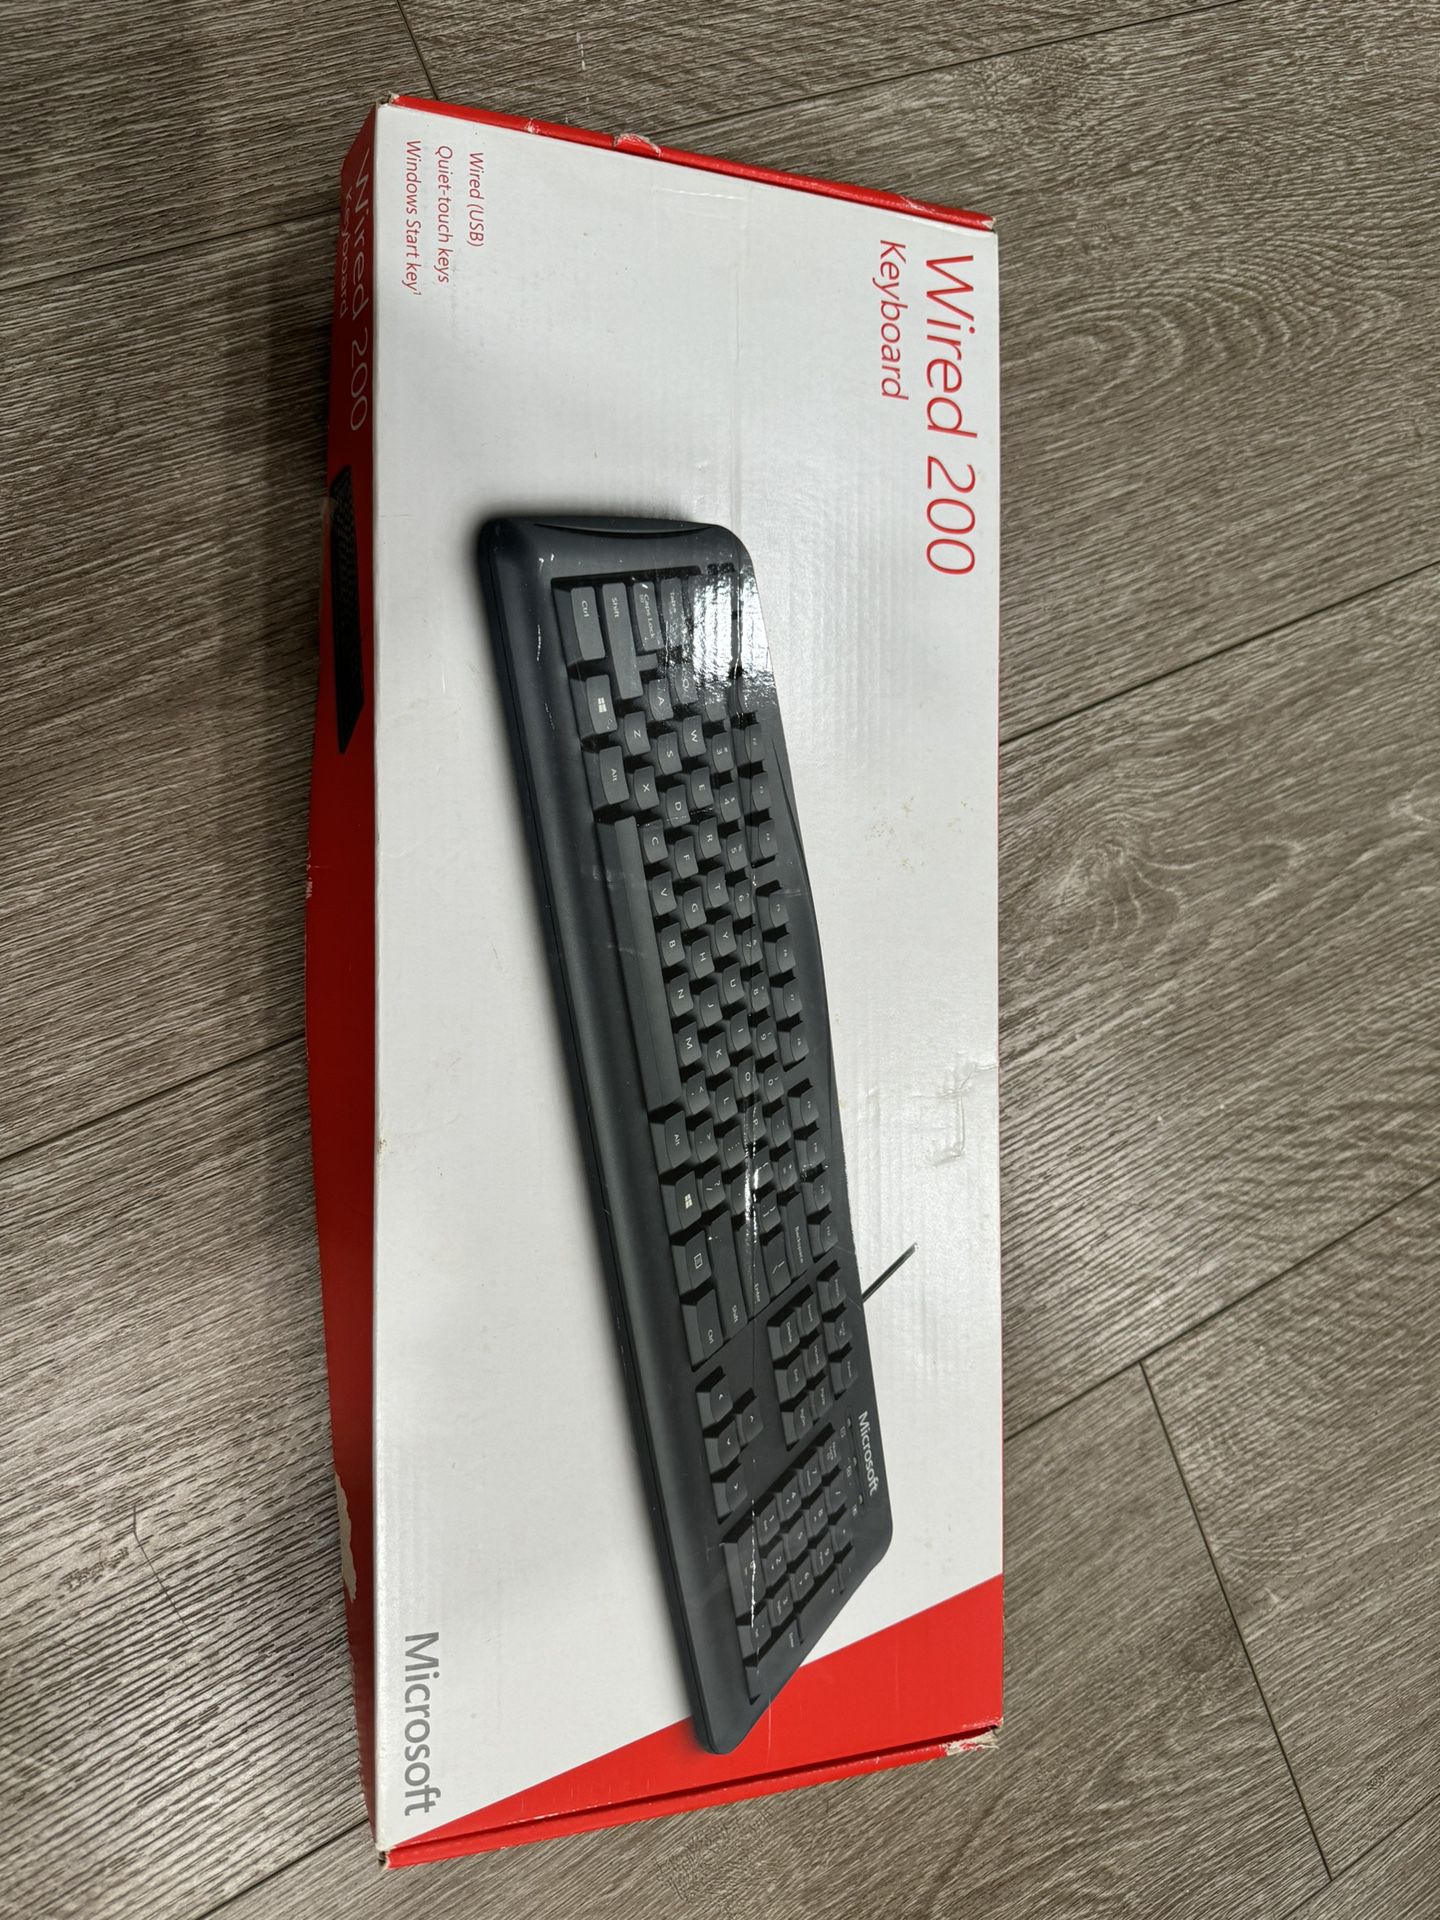 Black Wired Keyboard